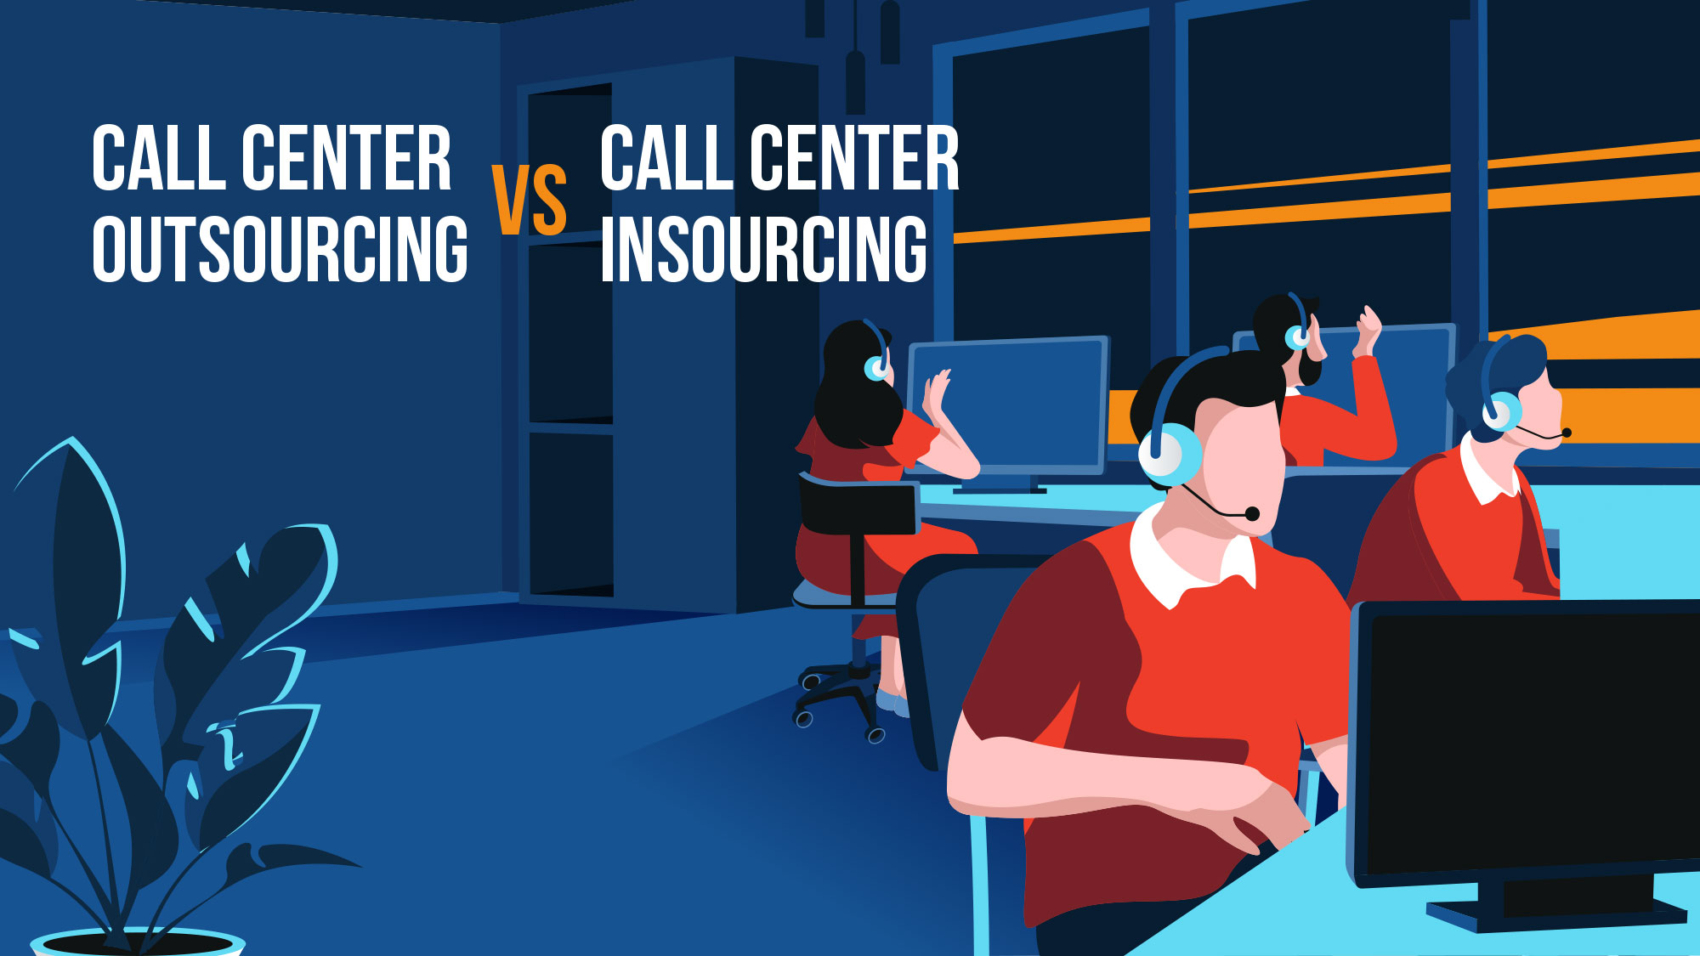 Call center outsourcing